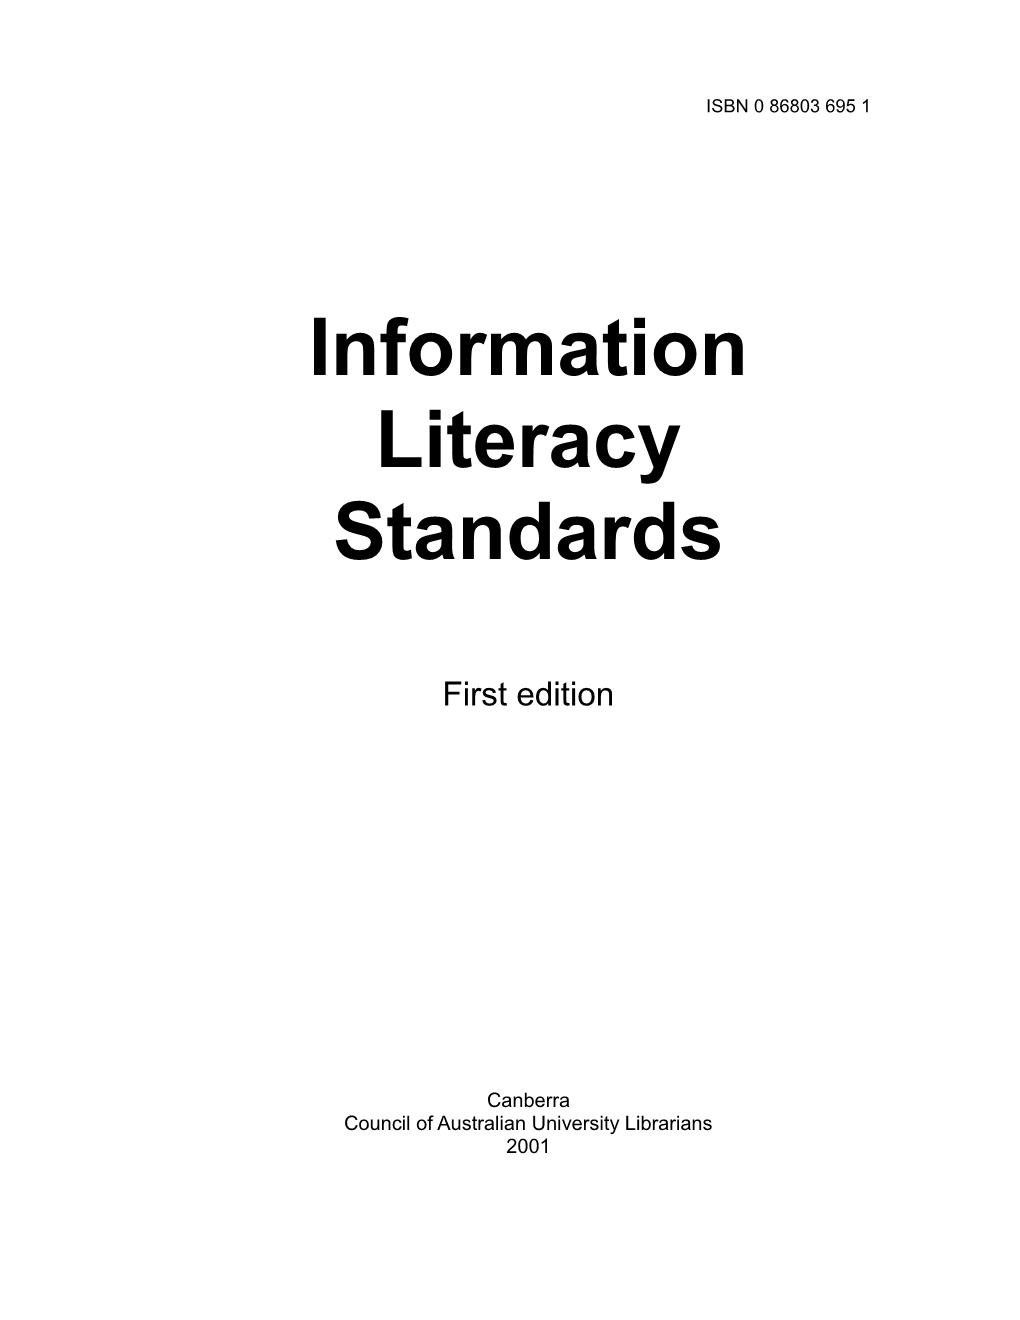 Information Literacy Standards